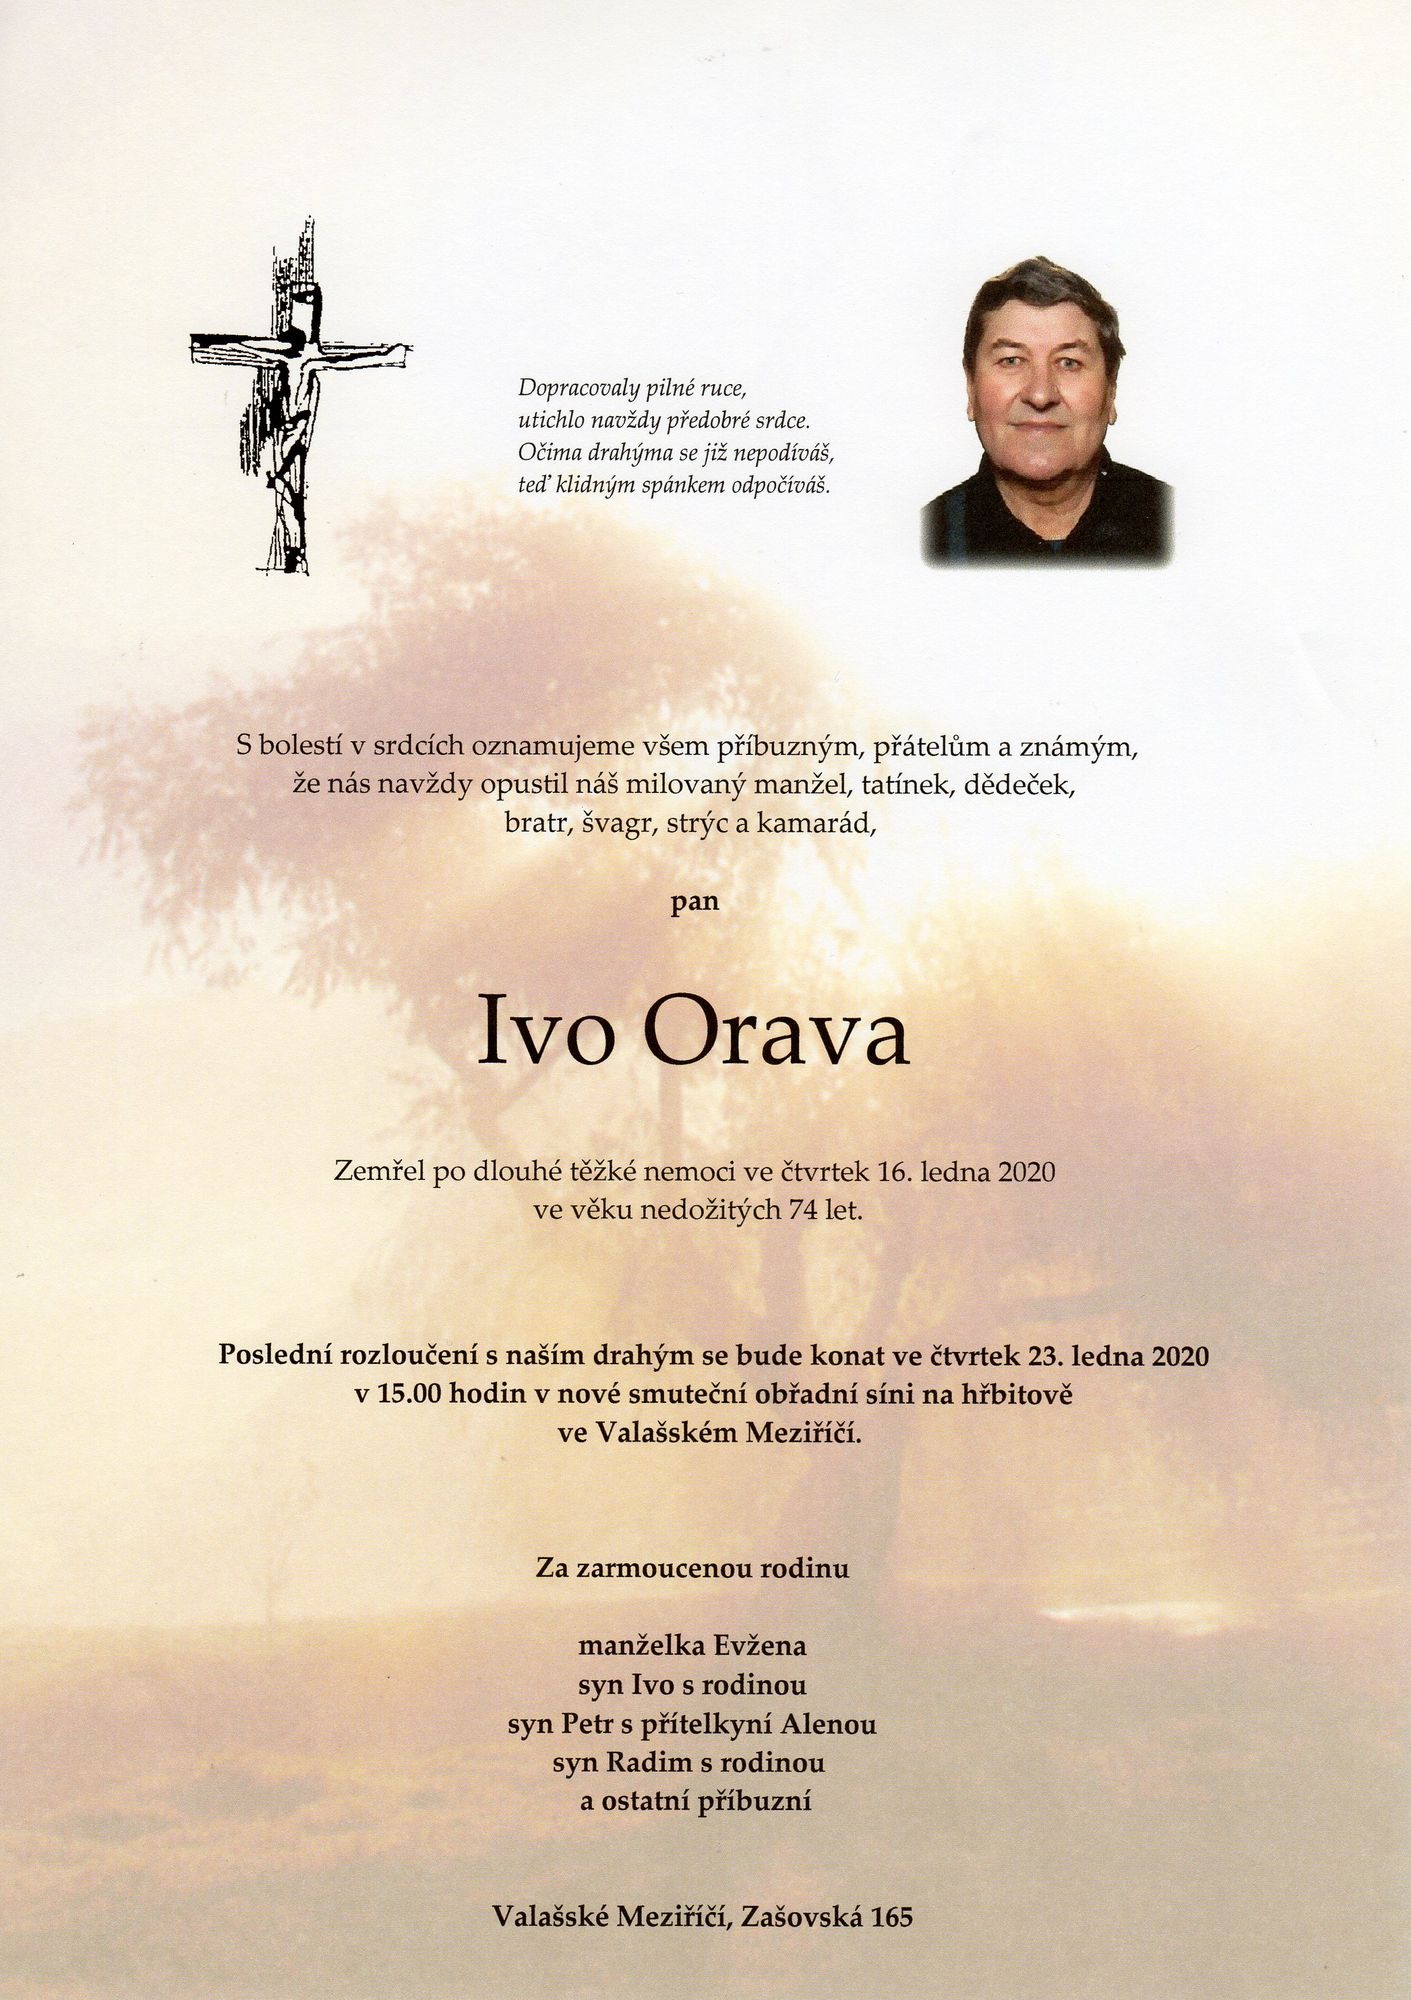 Ivo Orava